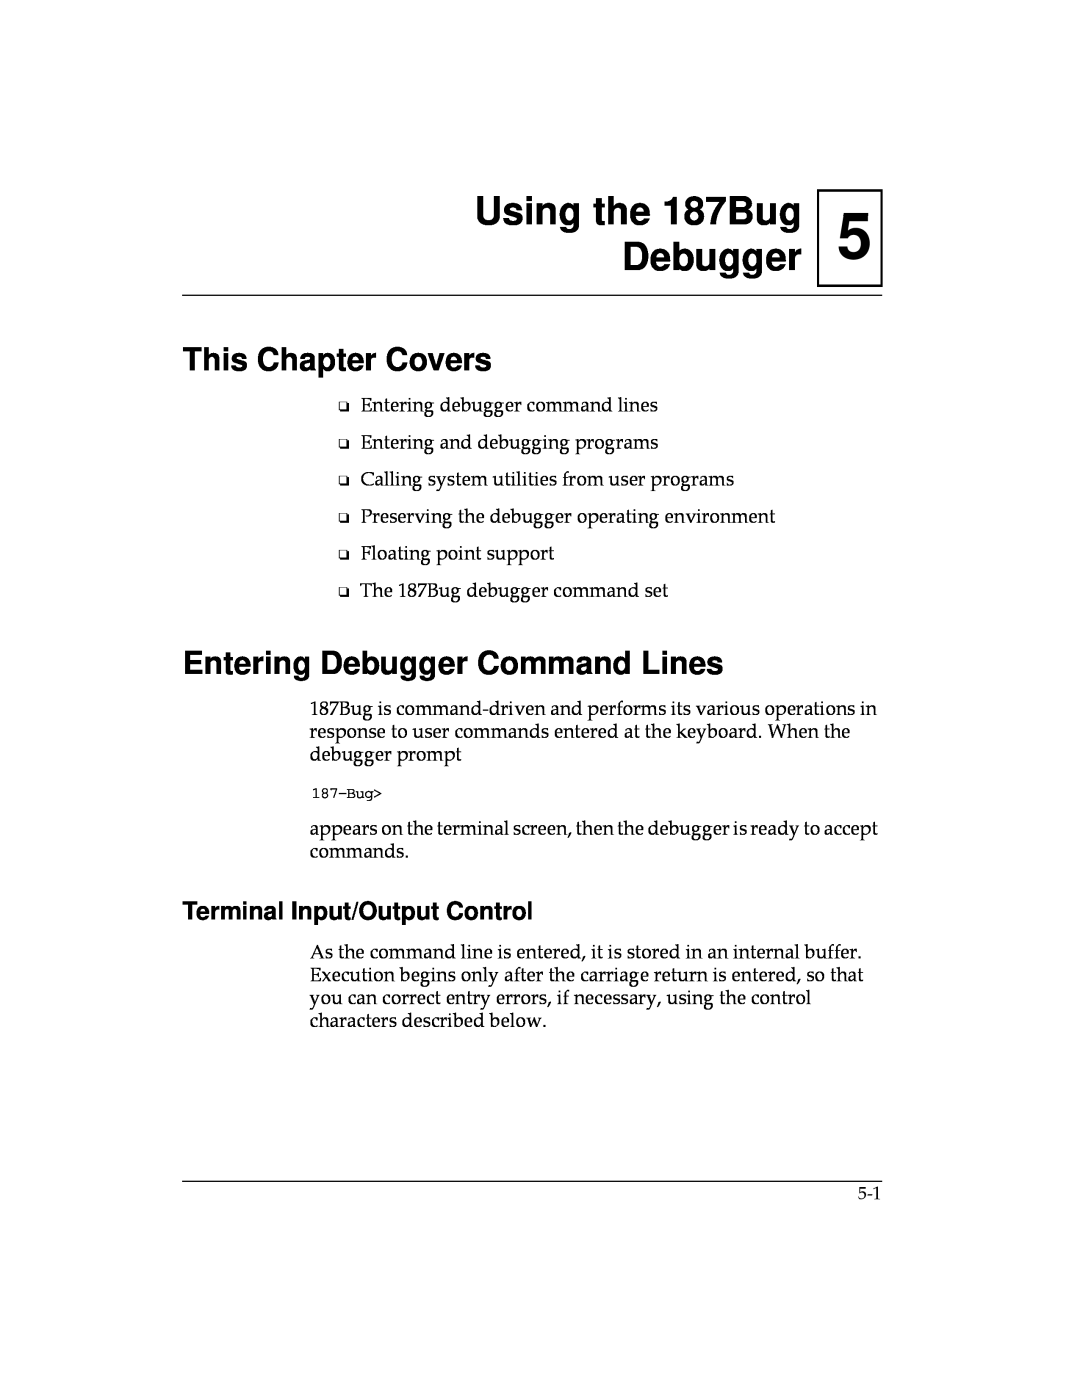 Motorola MVME187 manual Using the 187Bug Debugger, Entering Debugger Command Lines, Terminal Input/Output Control 